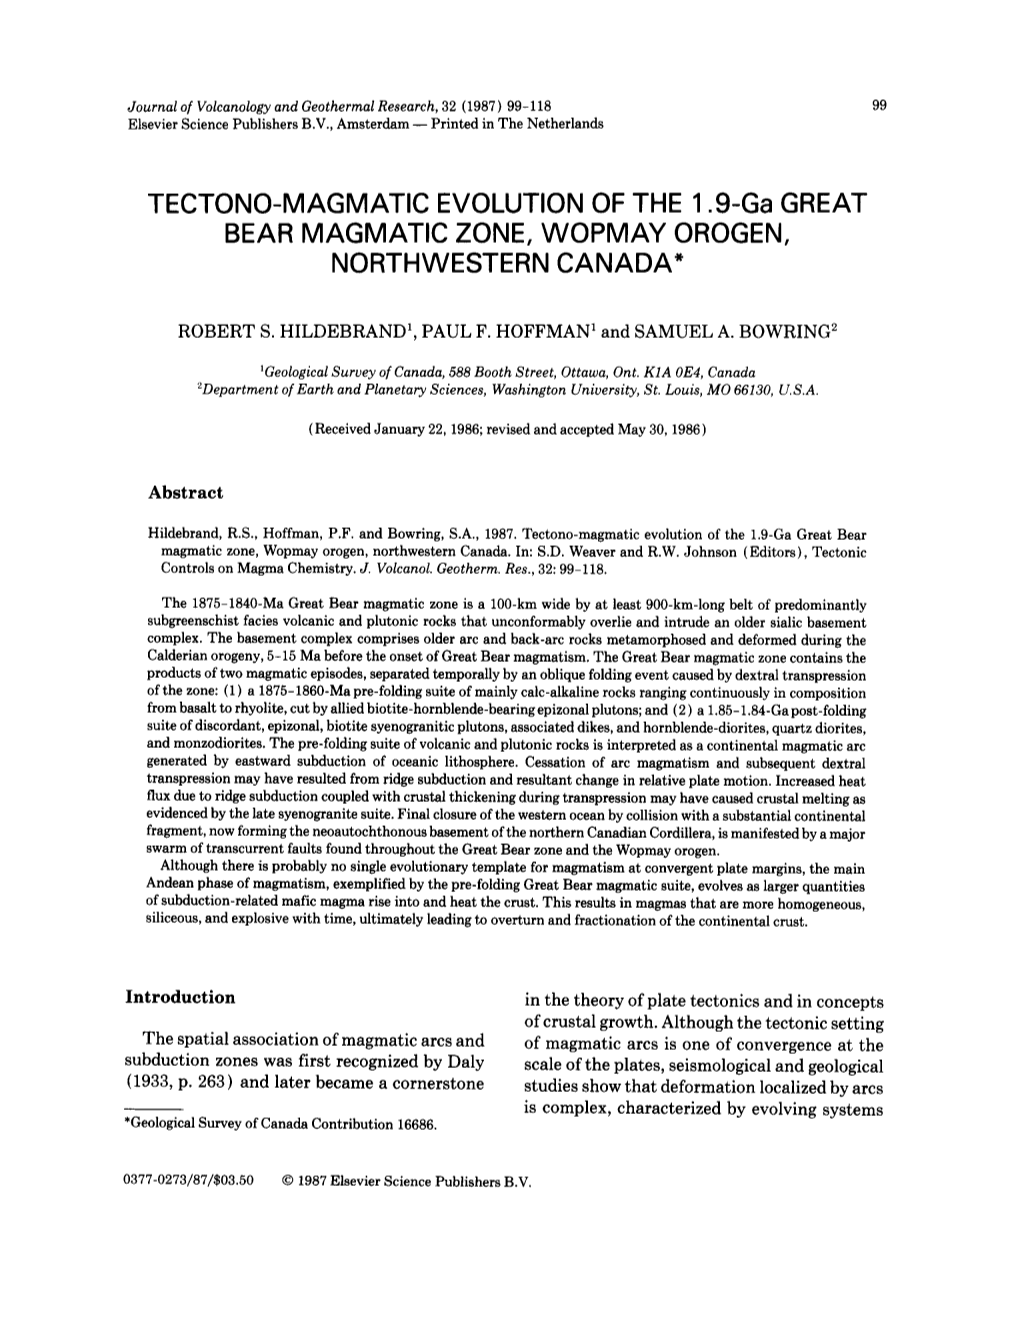 TECTONO-MAGMATIC EVOLUTION of the 1.9-Ga GREAT BEAR MAGMATIC ZONE, WOPMAY OROGEN, NORTHWESTERN CANADA*